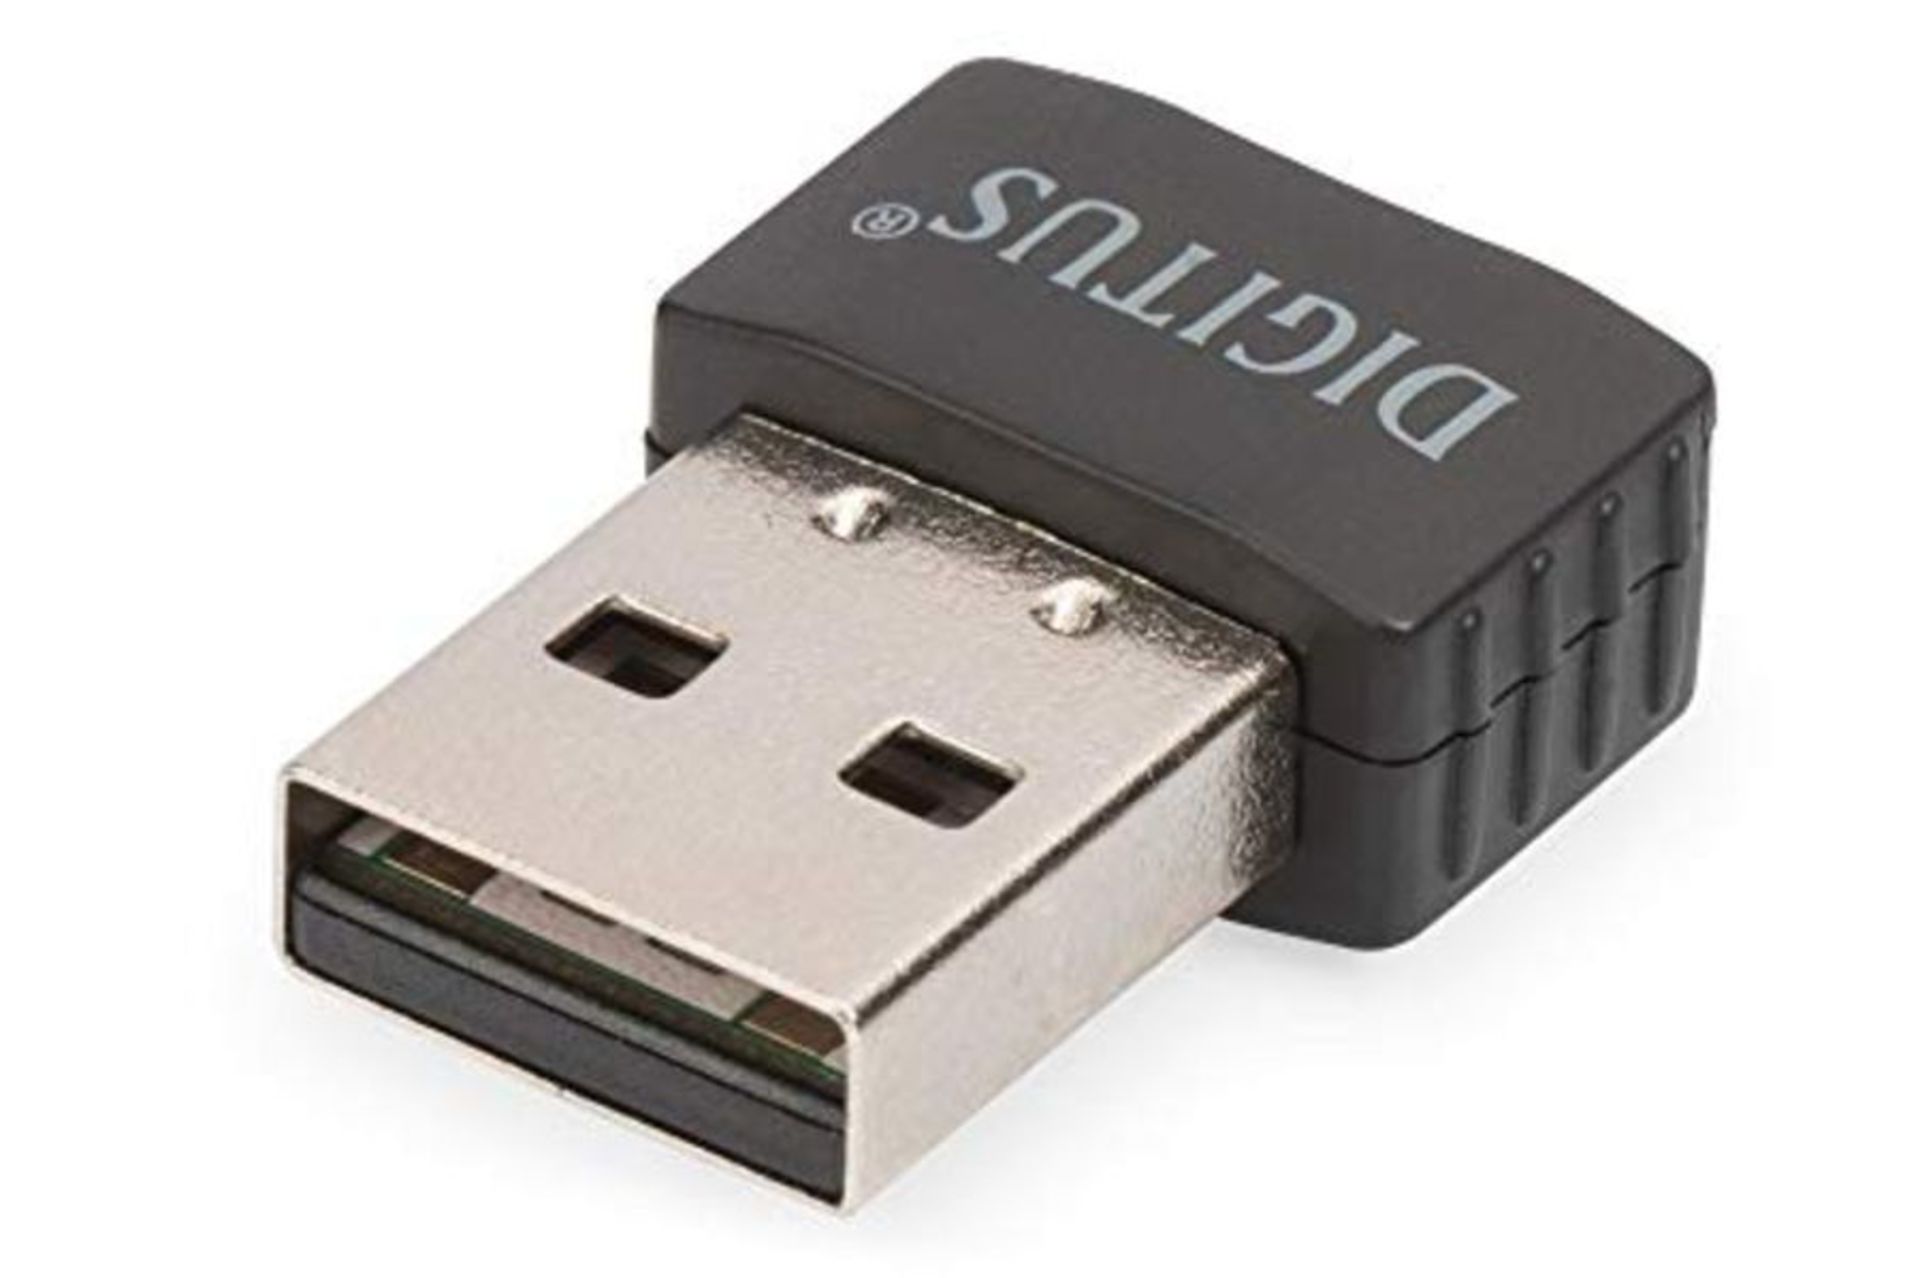 Digitus 70565 Network Adapter WLAN Stick USB 2.0 U Disk - Black